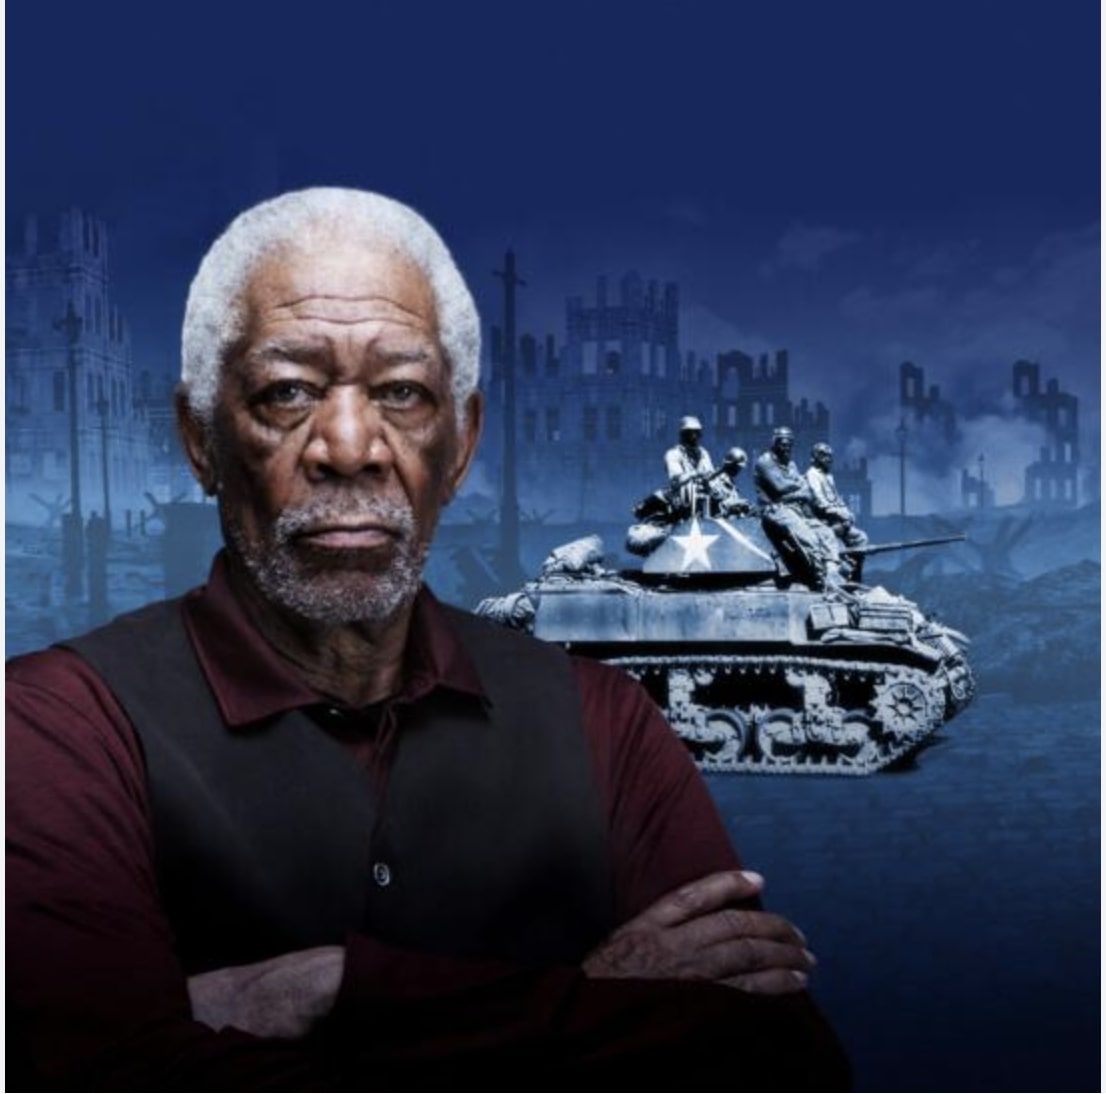 Morgan+Freeman+speaks+about+the+impact+of+the+761st+tank+batallion.